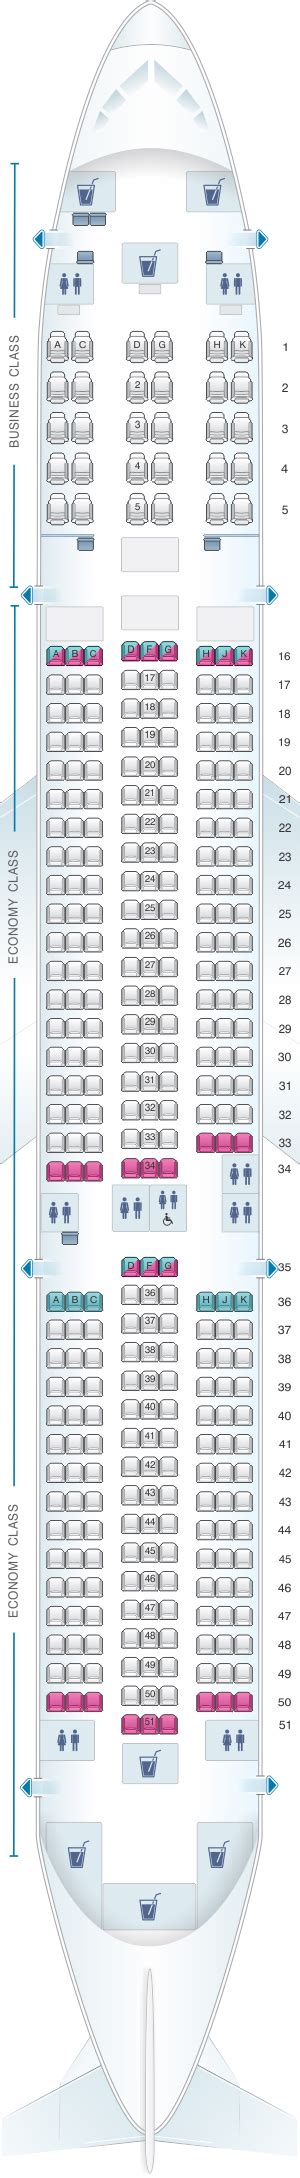 Delta A350 900 Seat Map Elcho Table